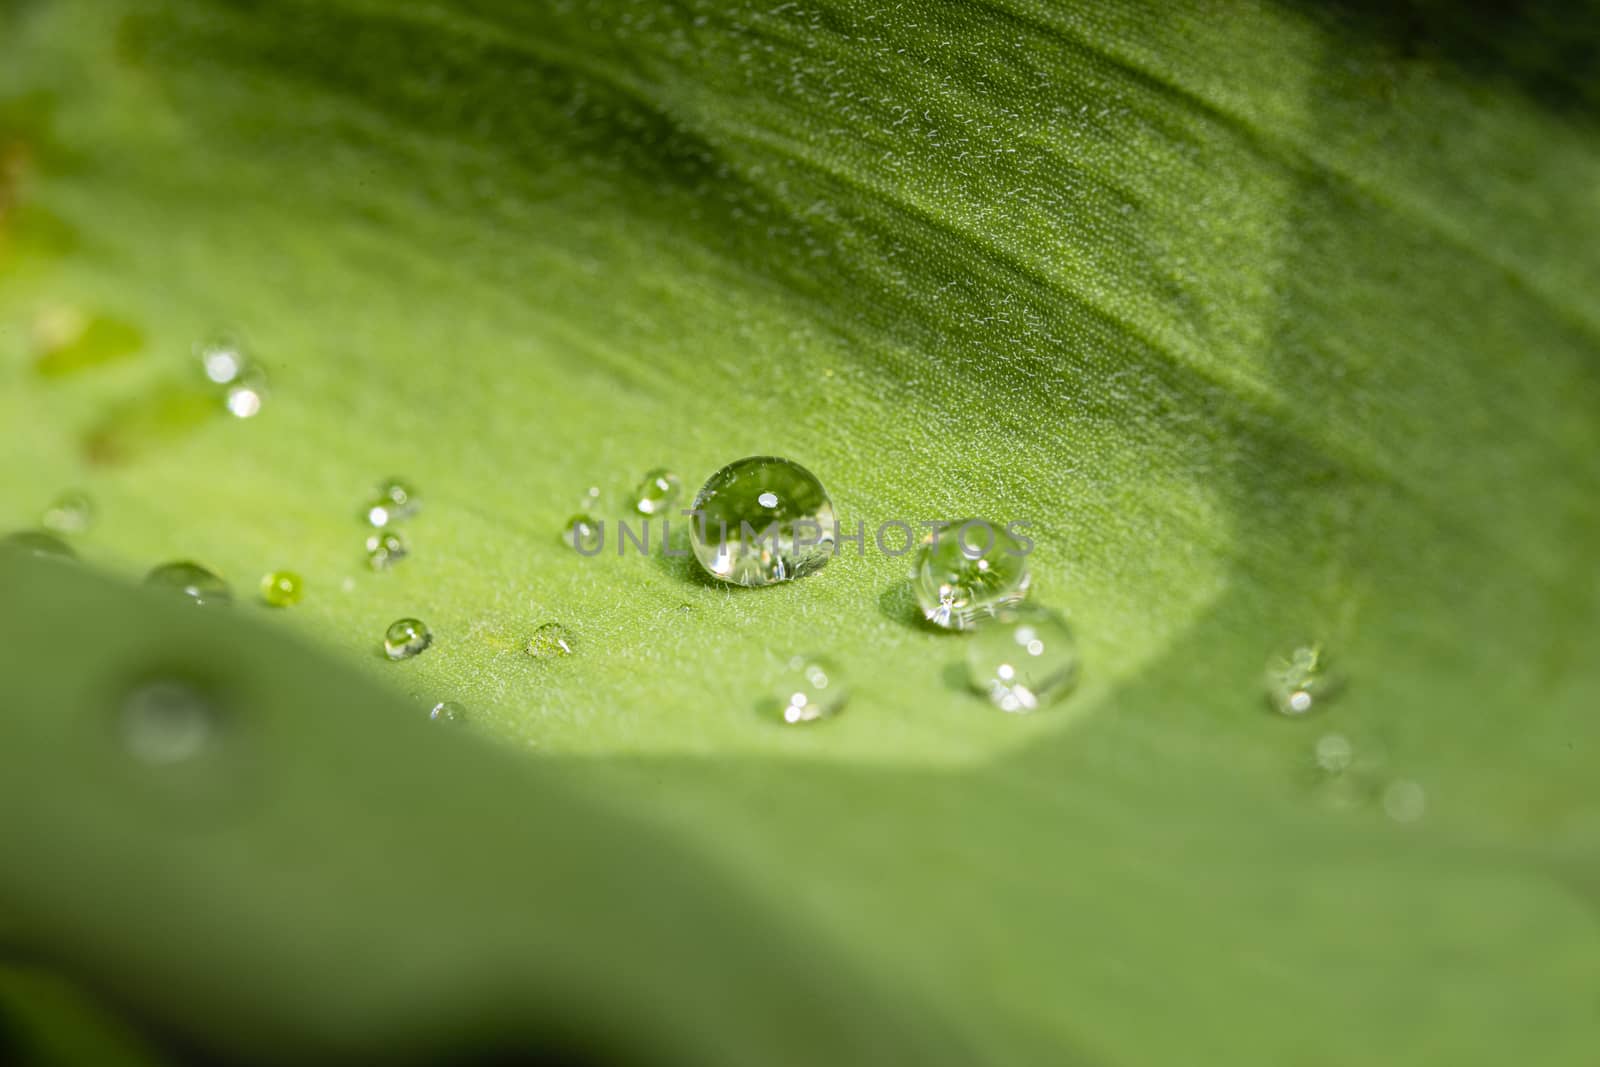 Water on leaf by mypstudio